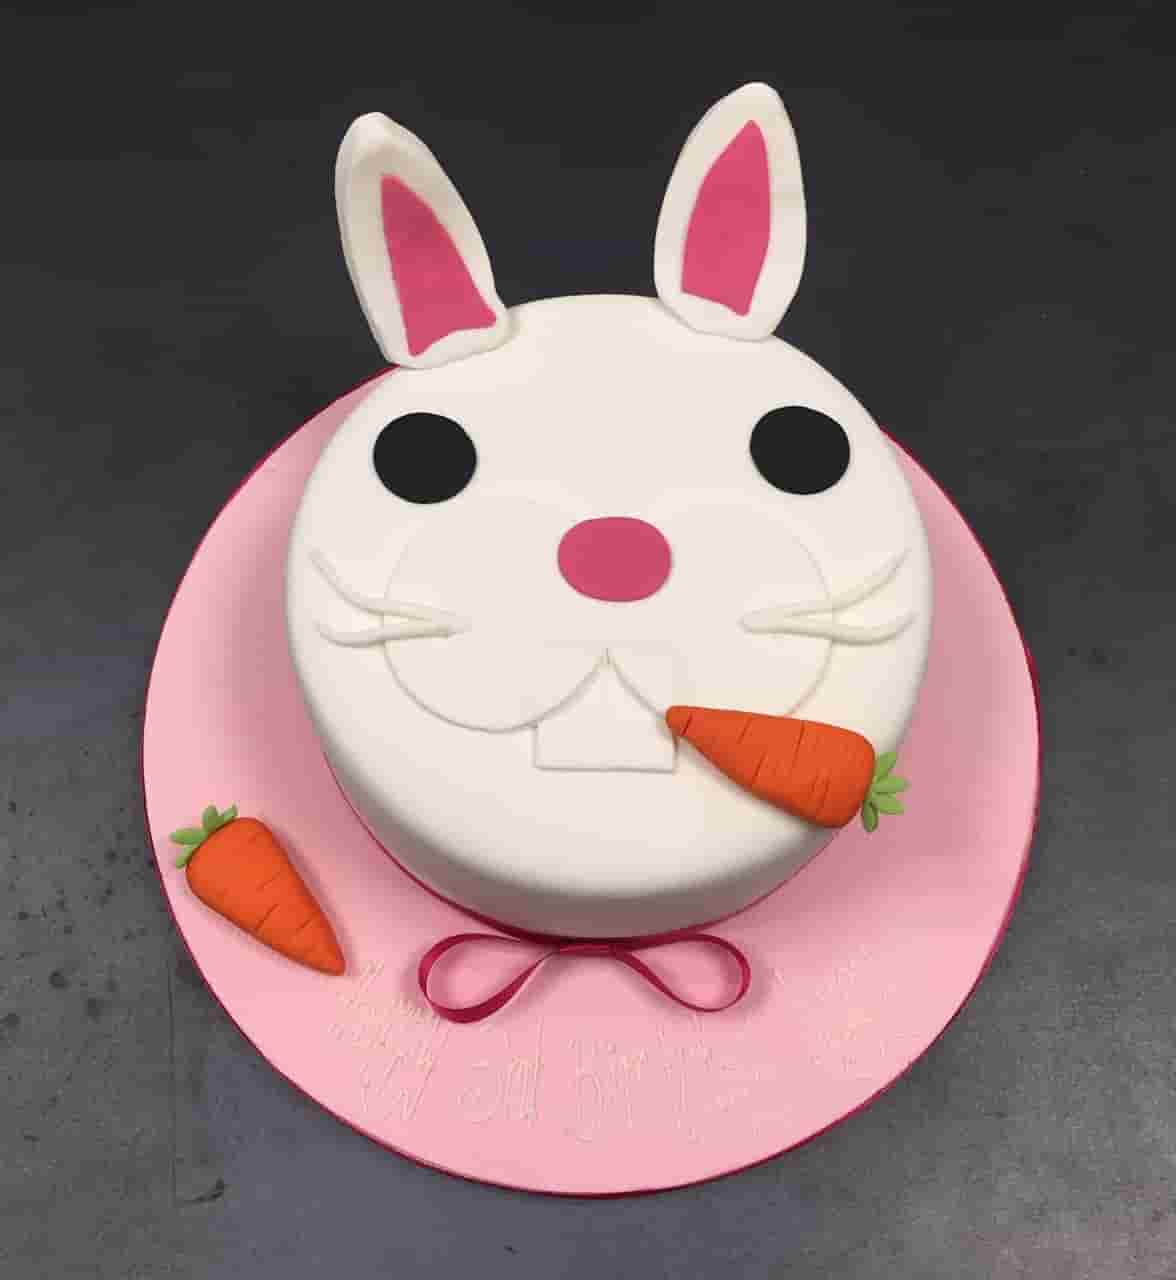 Bunny Birthday Cake: From-Scratch Recipe w/ Video Tutorial